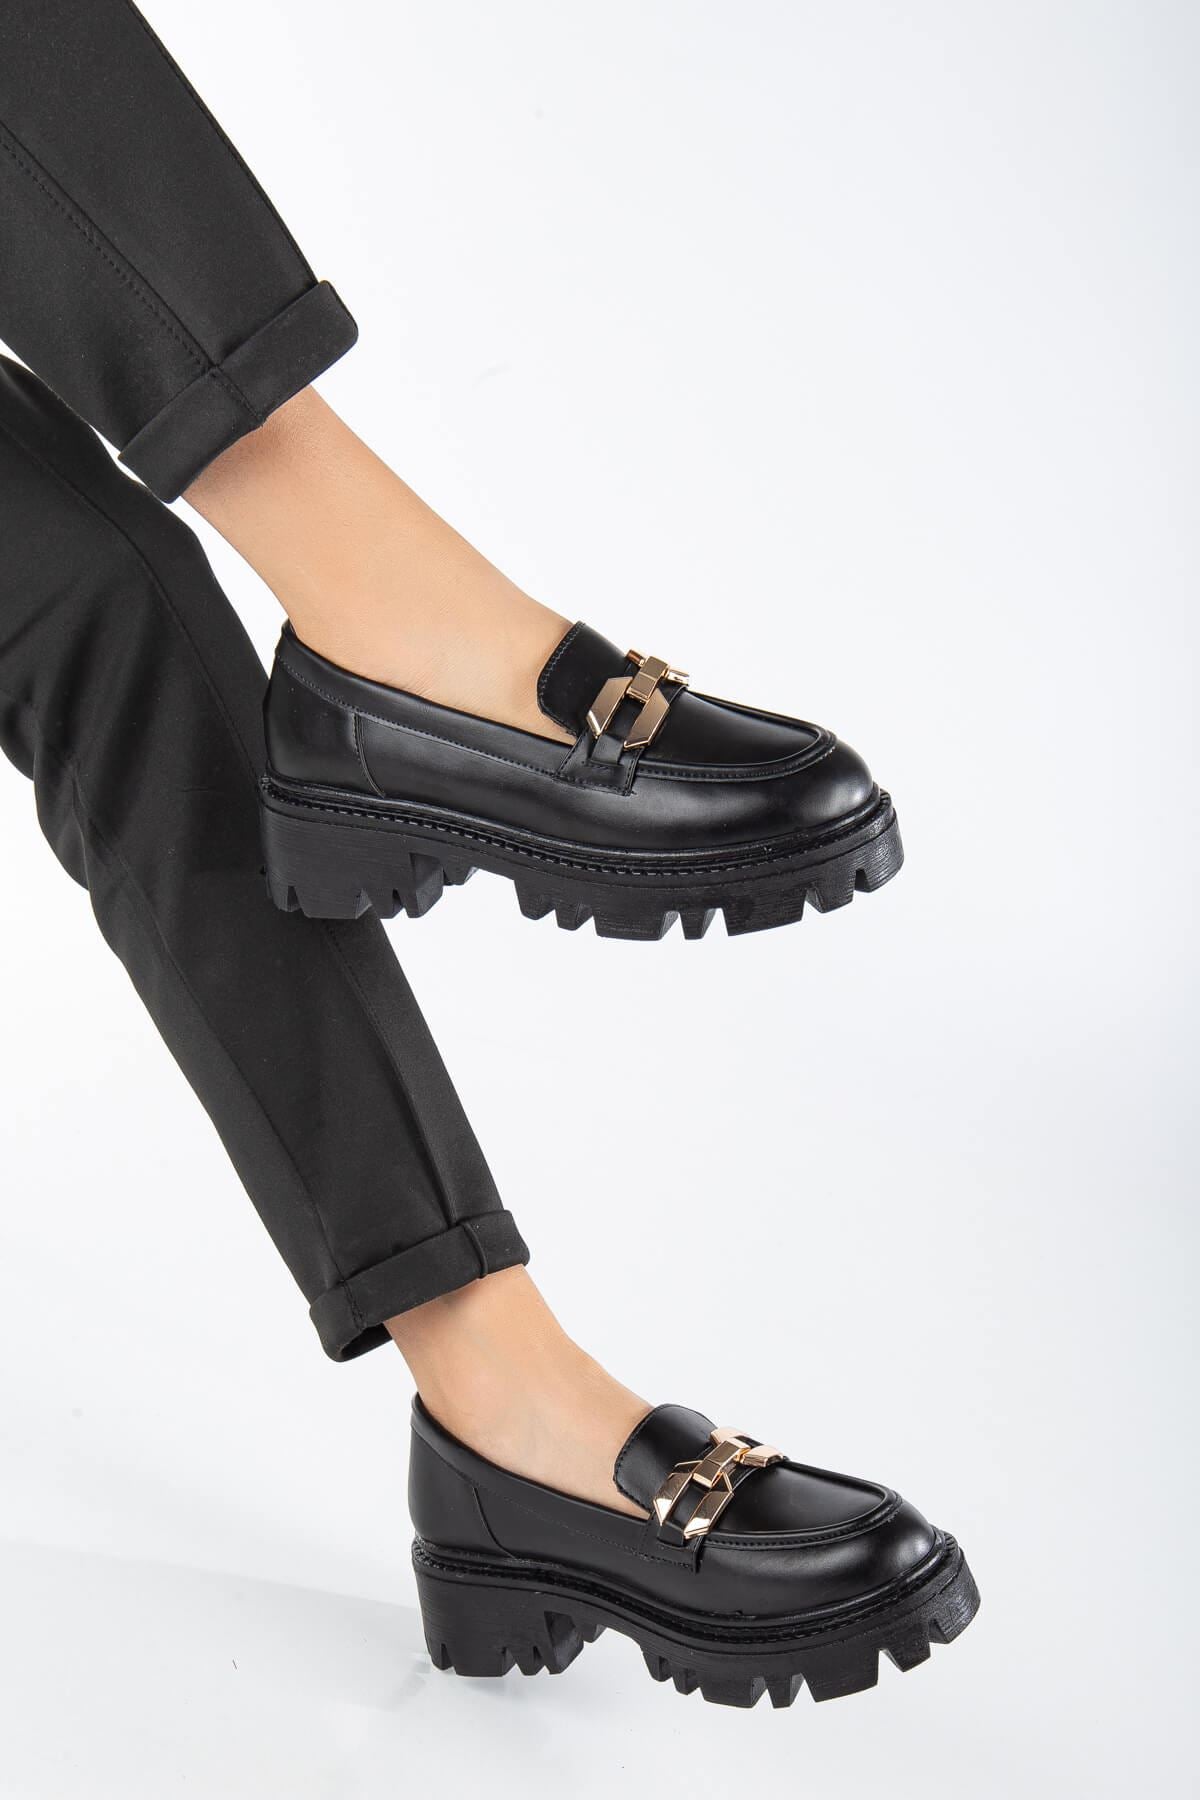 SONO Black Skin Oxford Women's Shoes - STREETMODE™